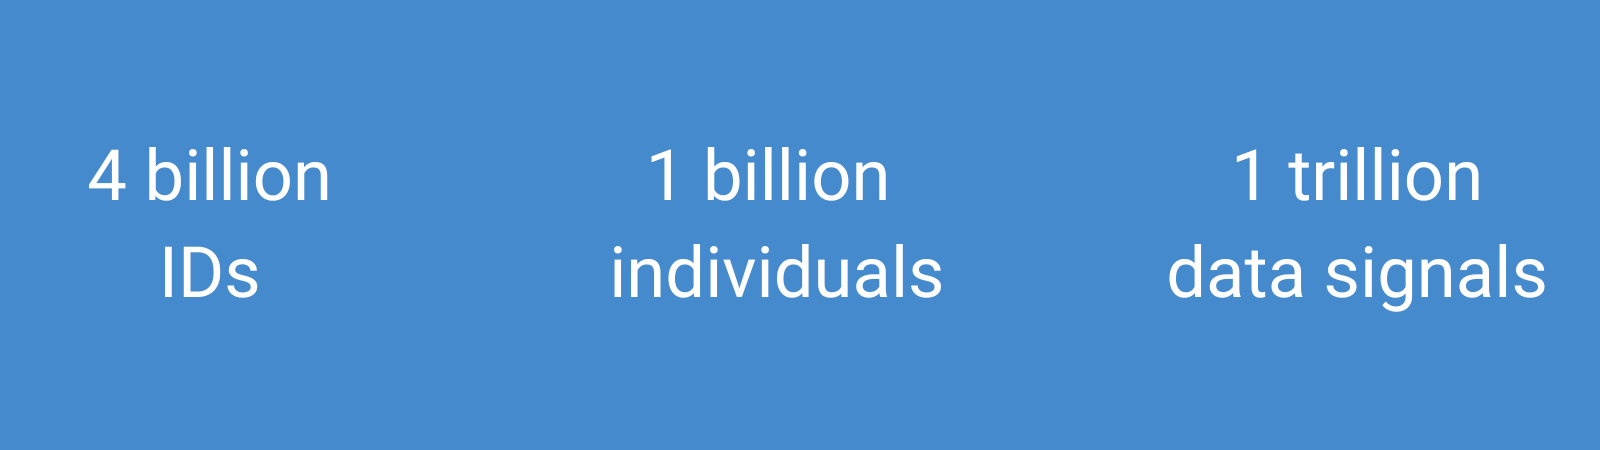 graphic that says "4 billion IDs," "1 billion individuals," and "1 trillion data signals" 